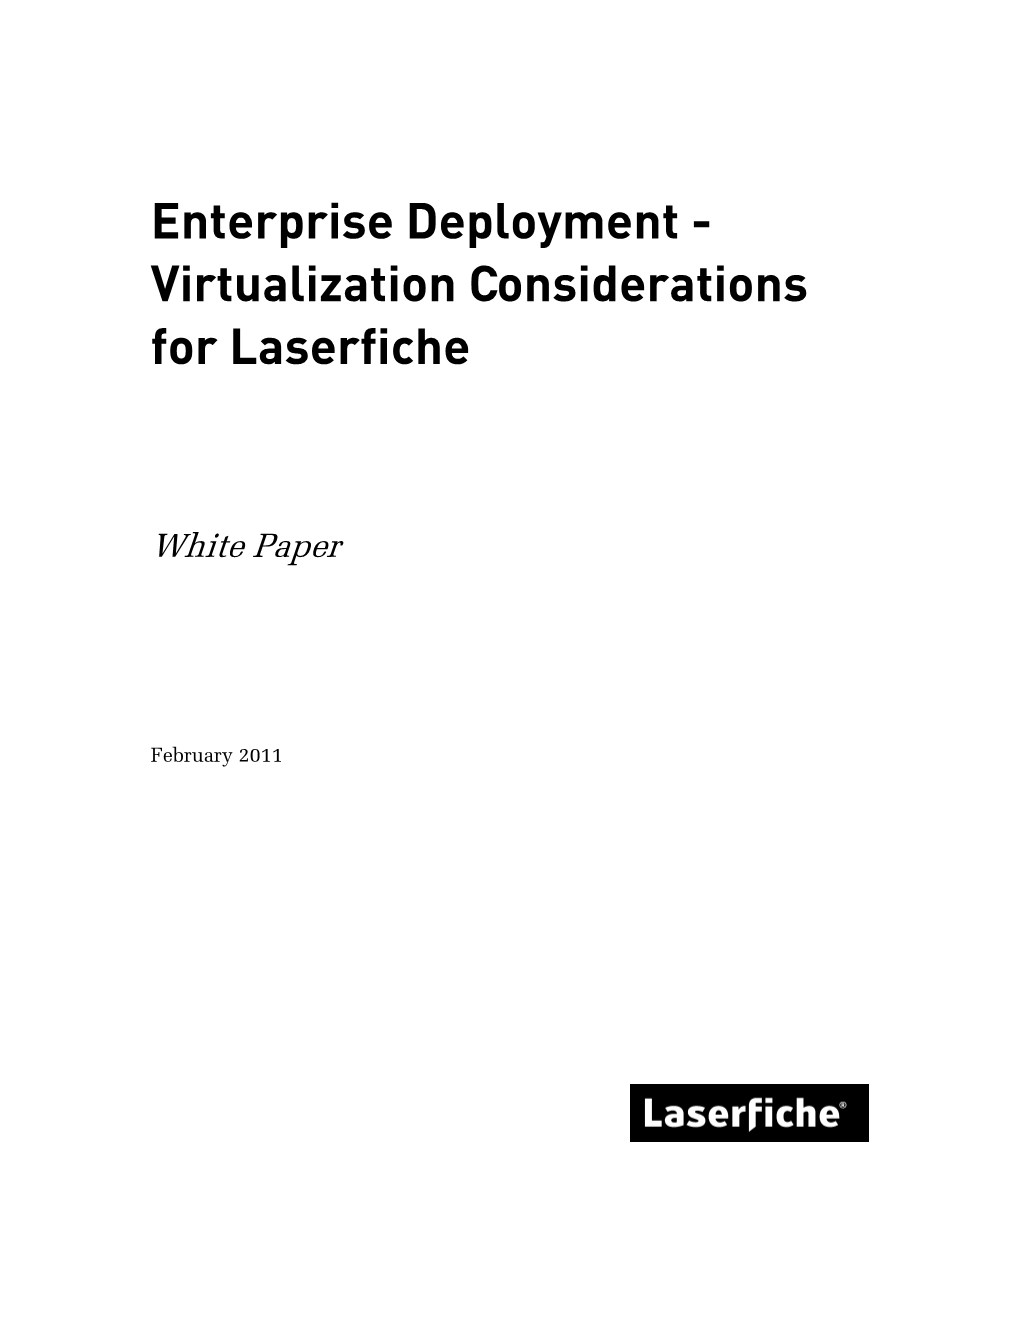 Enterprise Deployment - Virtualization Considerations for Laserfiche